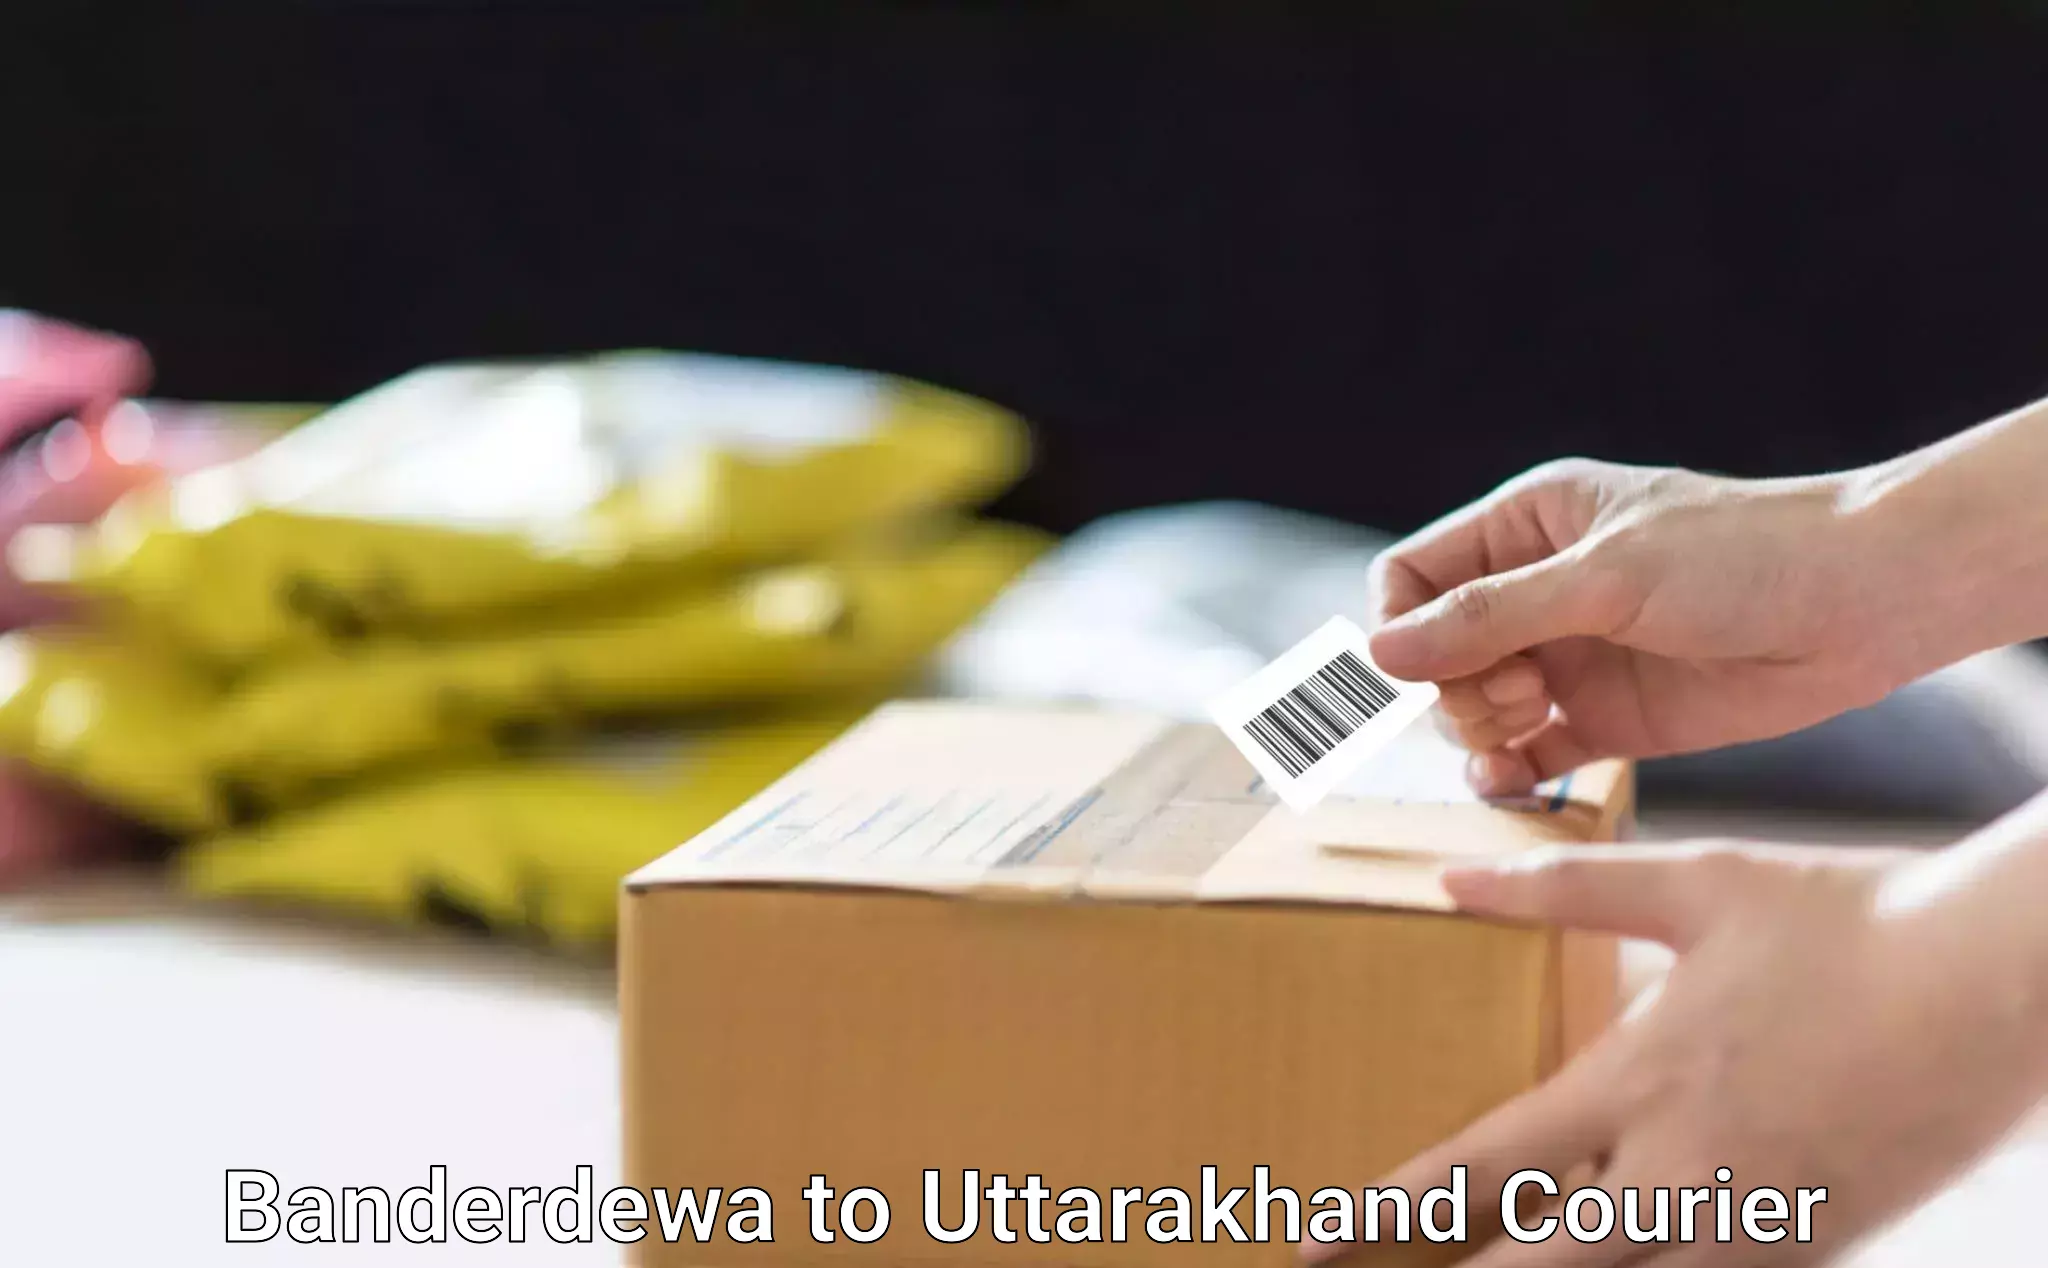 High-speed parcel service Banderdewa to Champawat